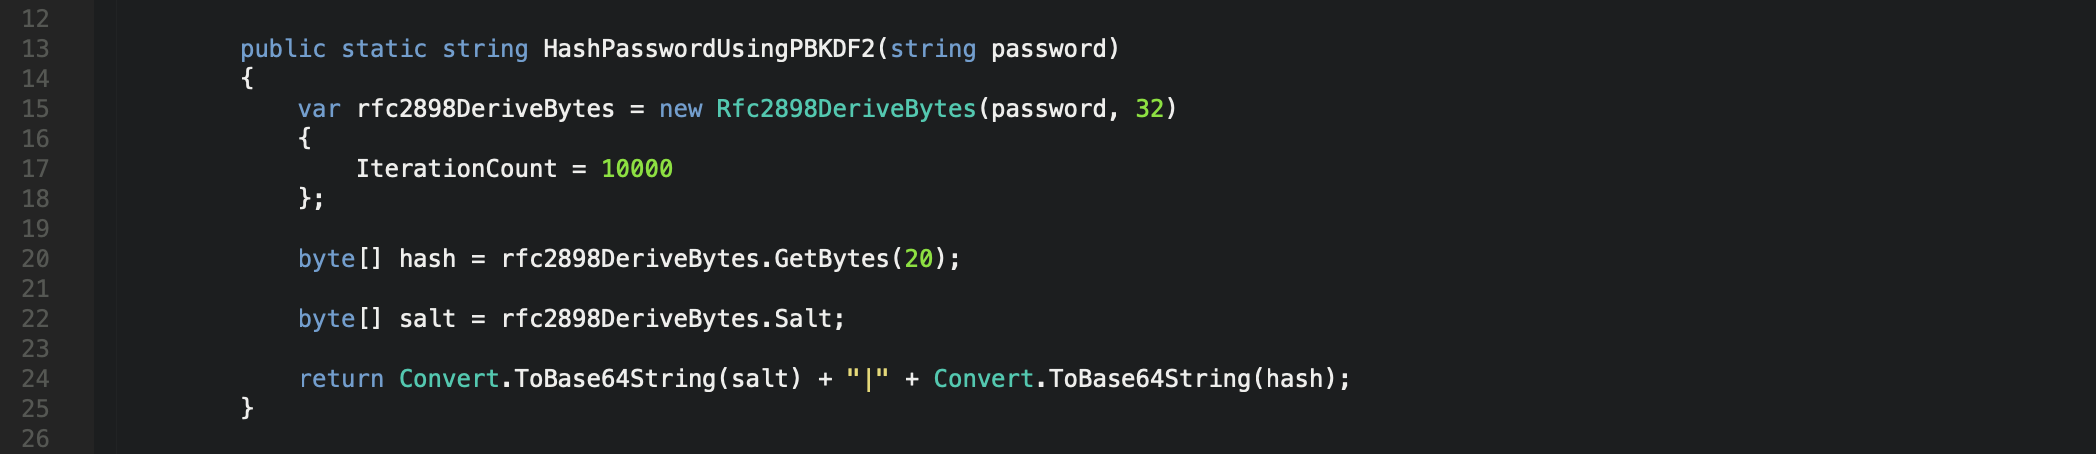 PBKDF2 Password Hash Algorithm - C# .Net Core